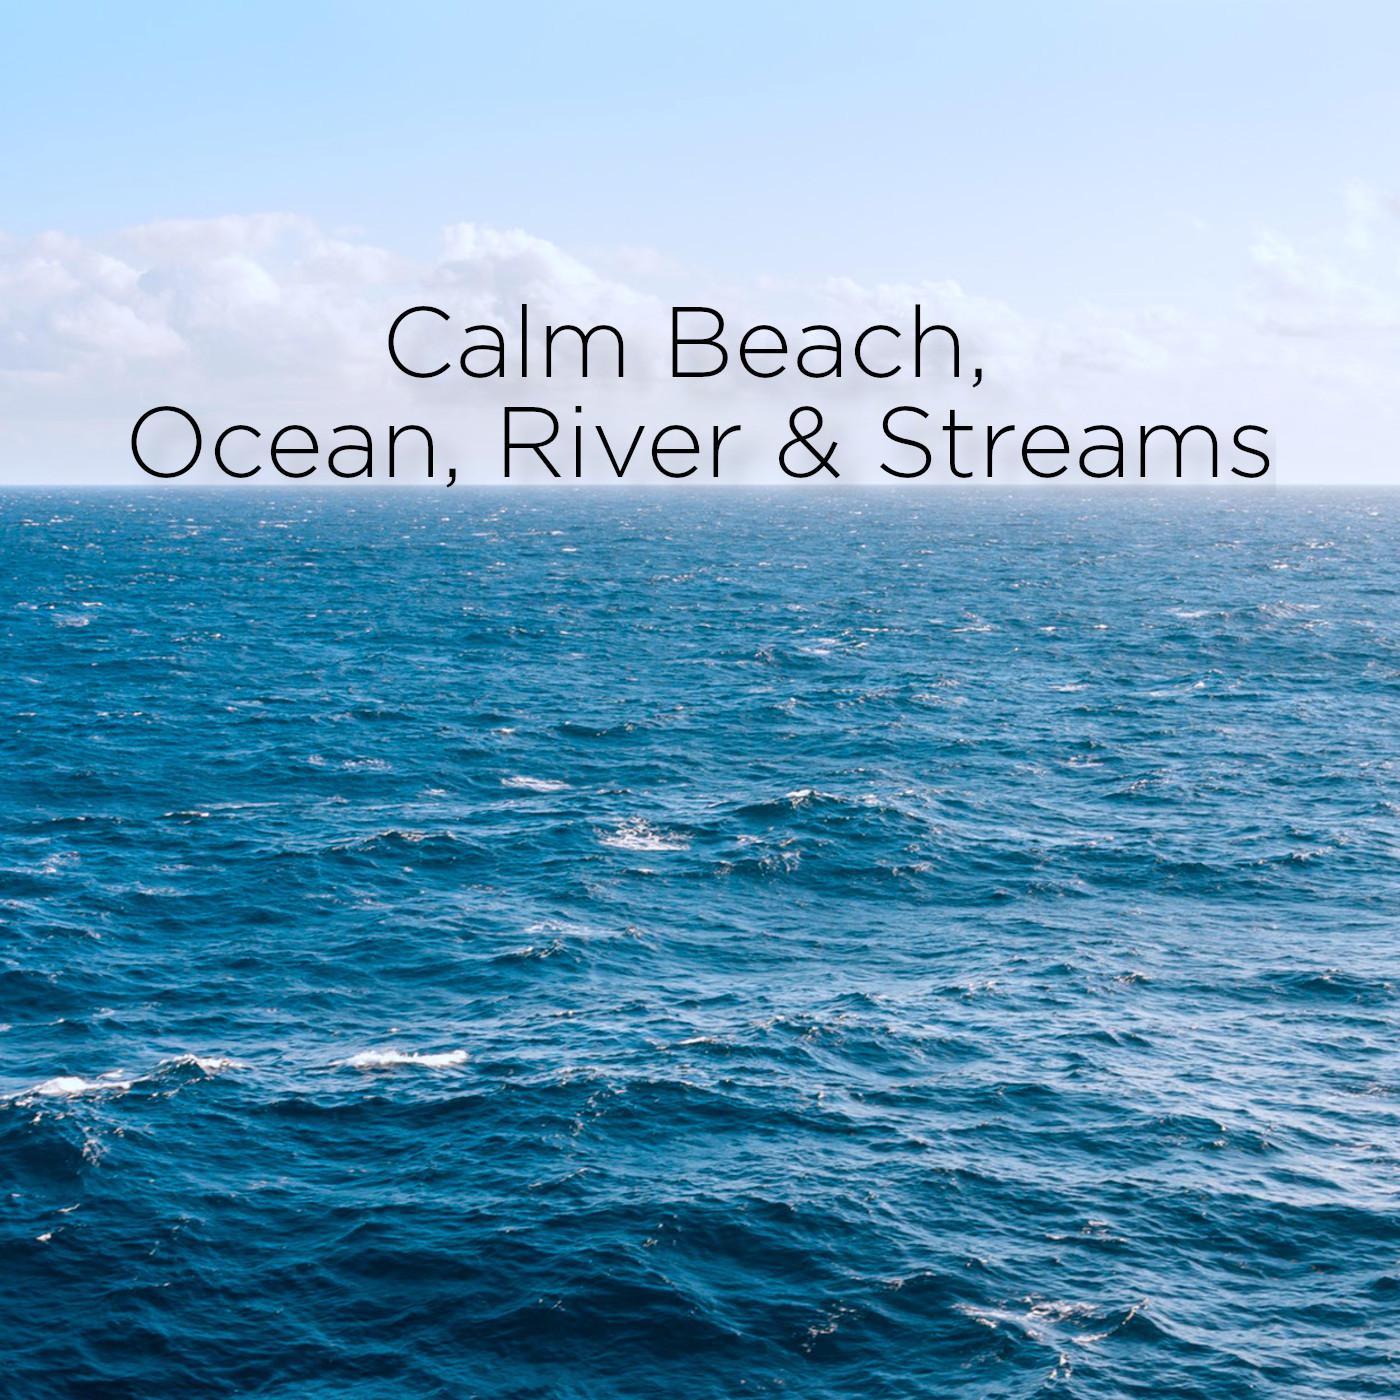 Calm Beach, Ocean, River & Streams